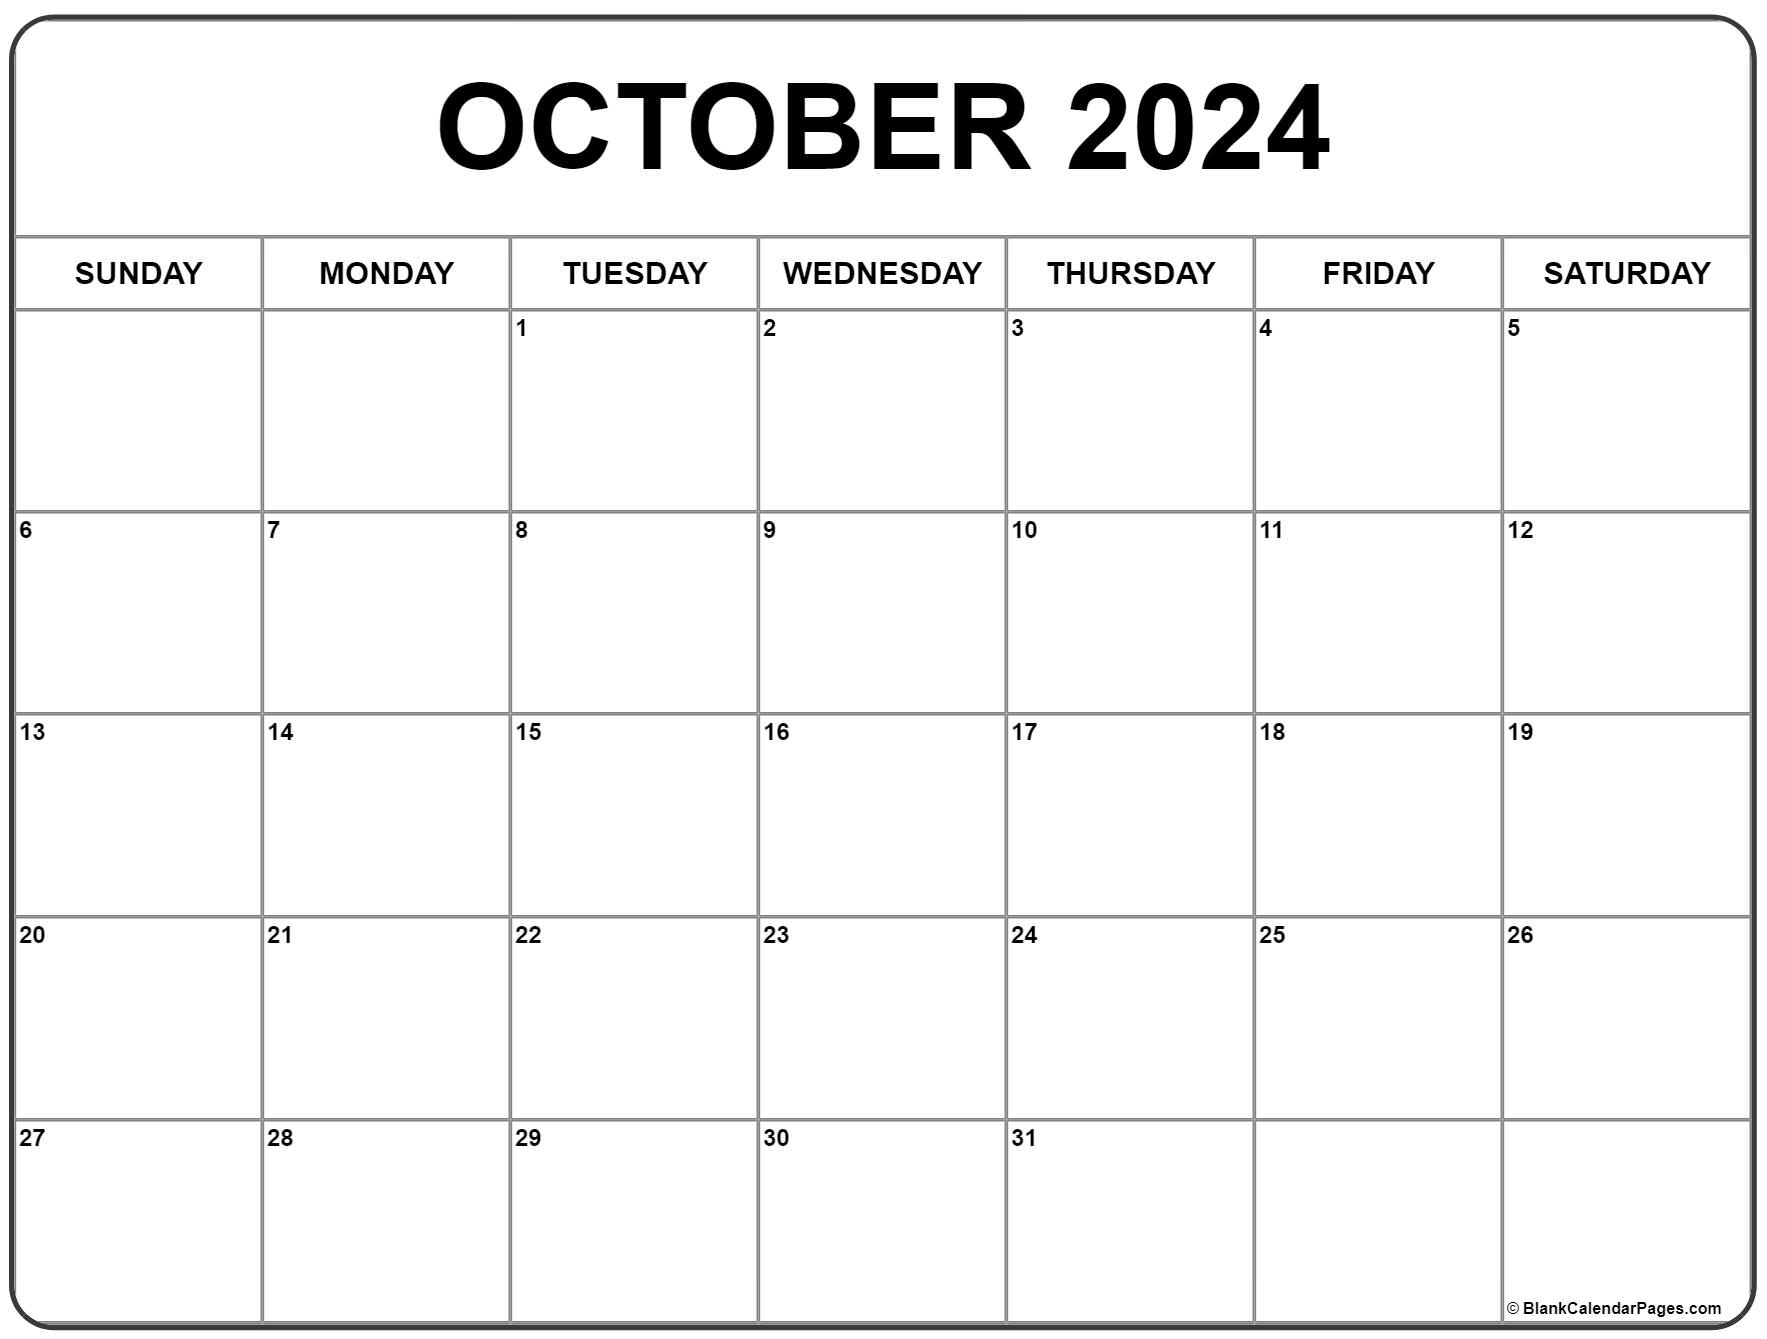 October 2024 Calendar | Free Printable Calendar for Printable Monthly Calendar October 2024